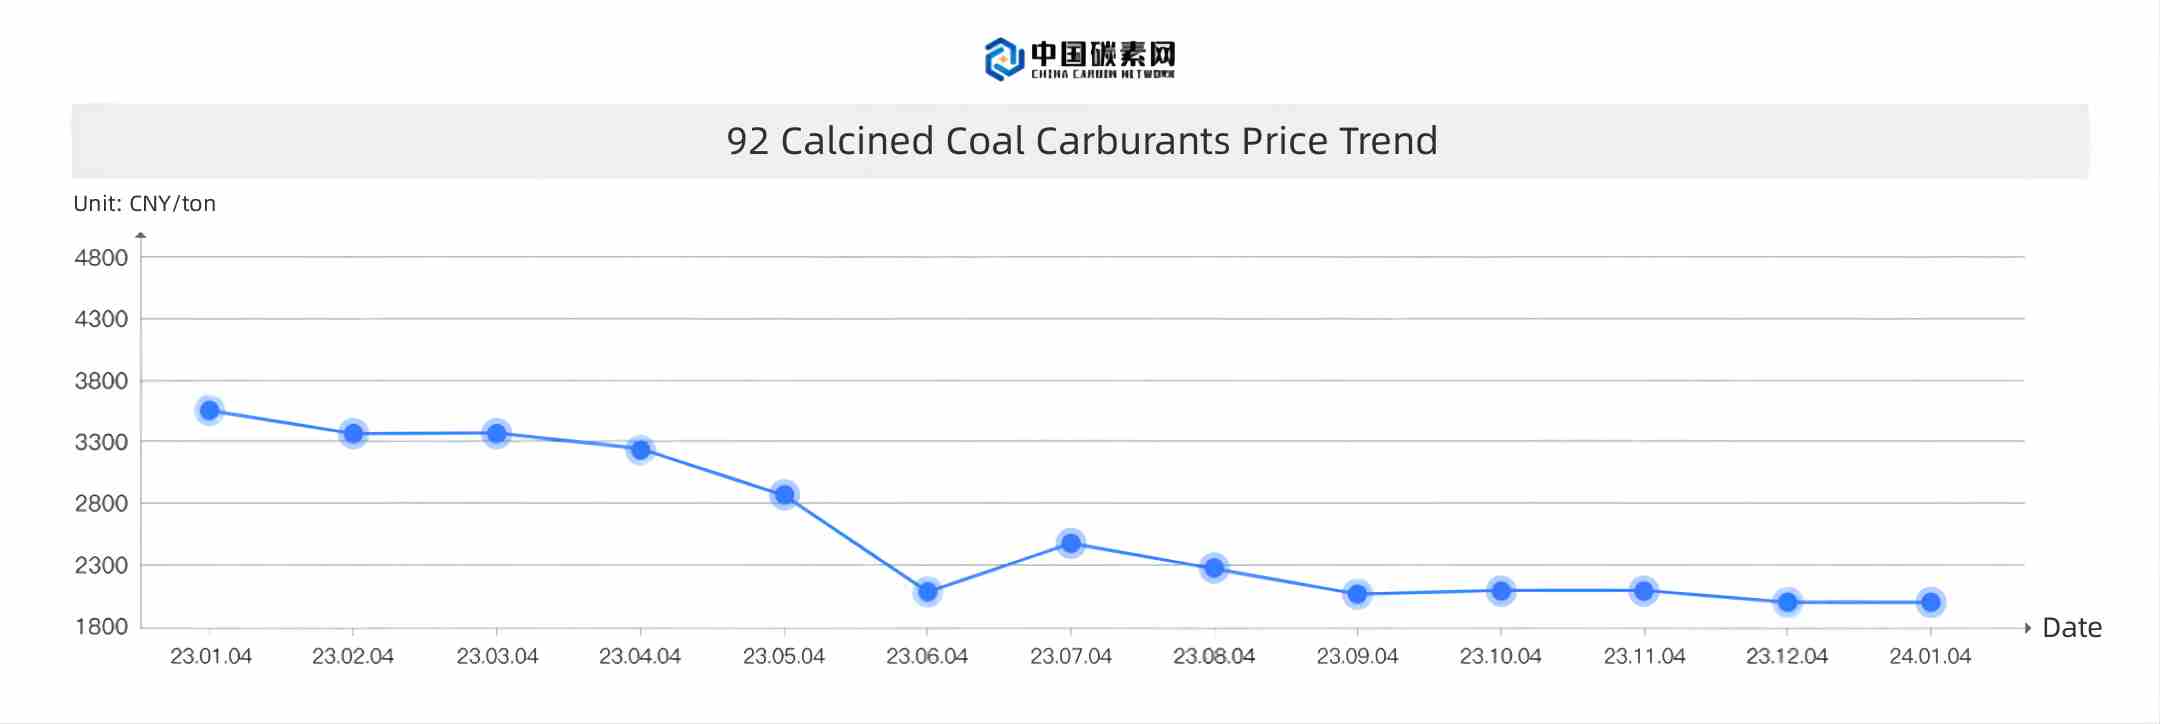 92 Calcined Coal Carburants Price Trend.jpg